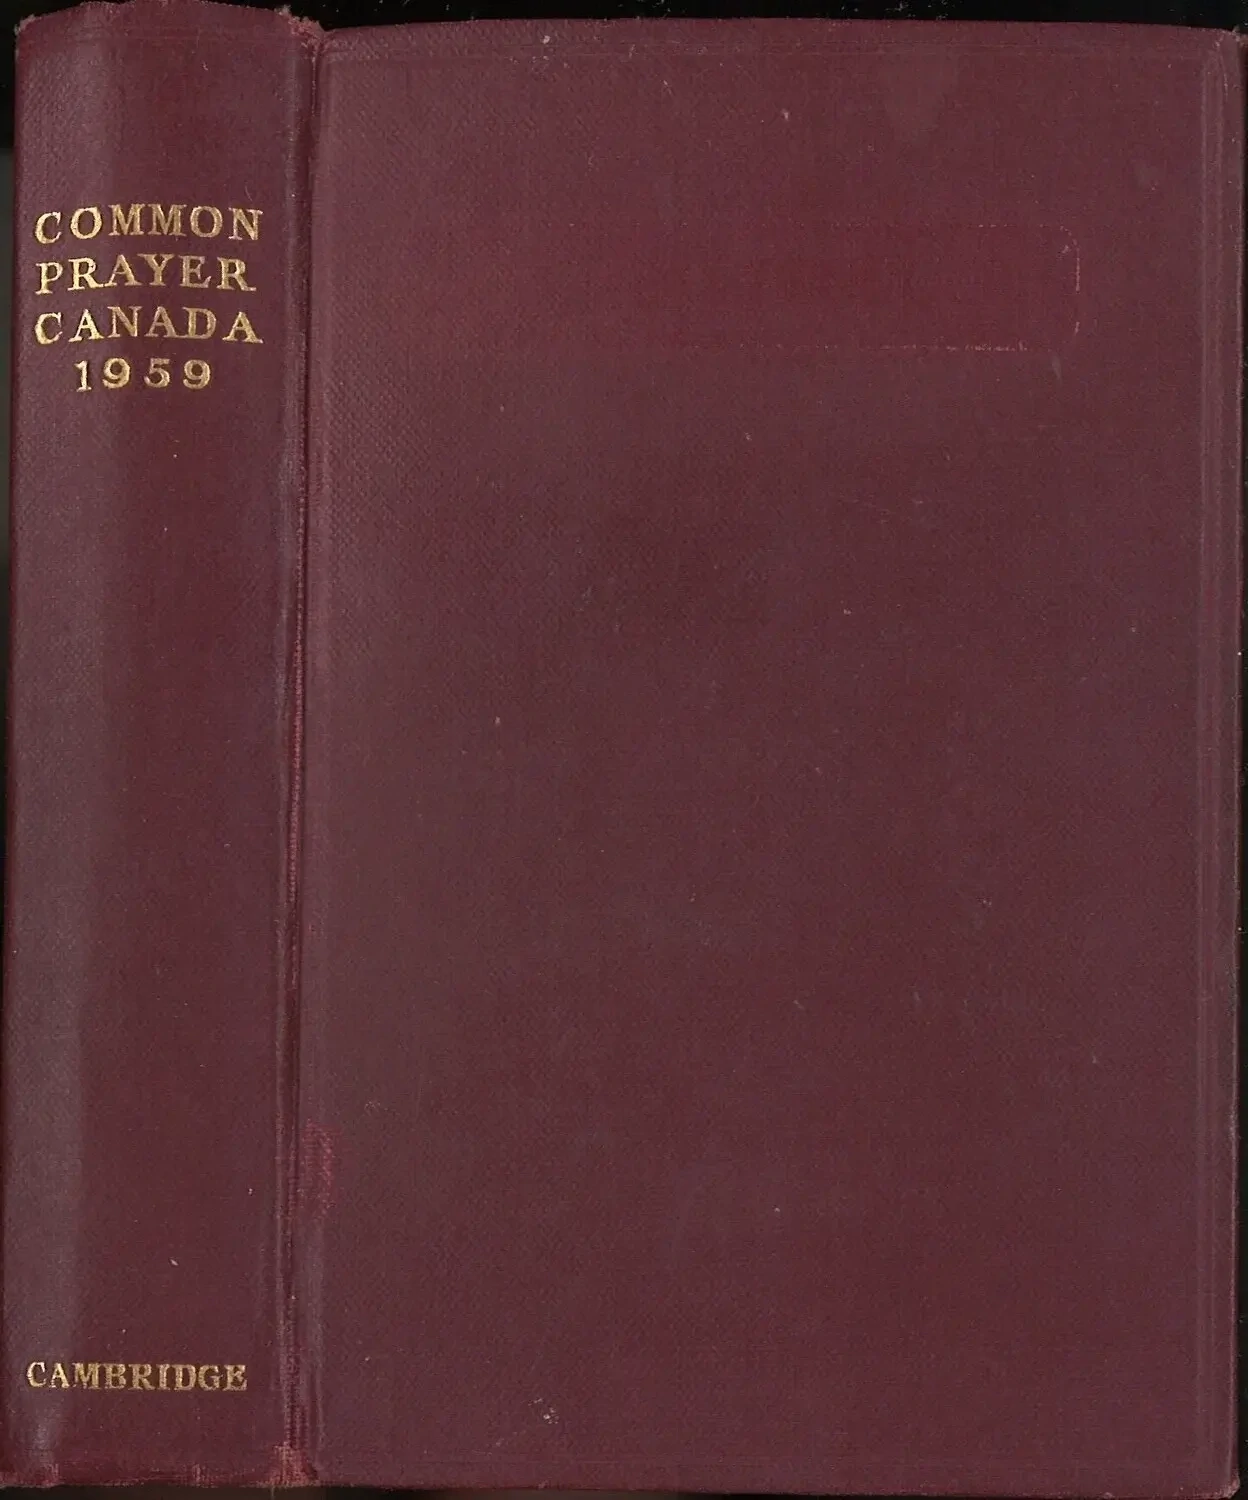 Common Prayer Canada 1959